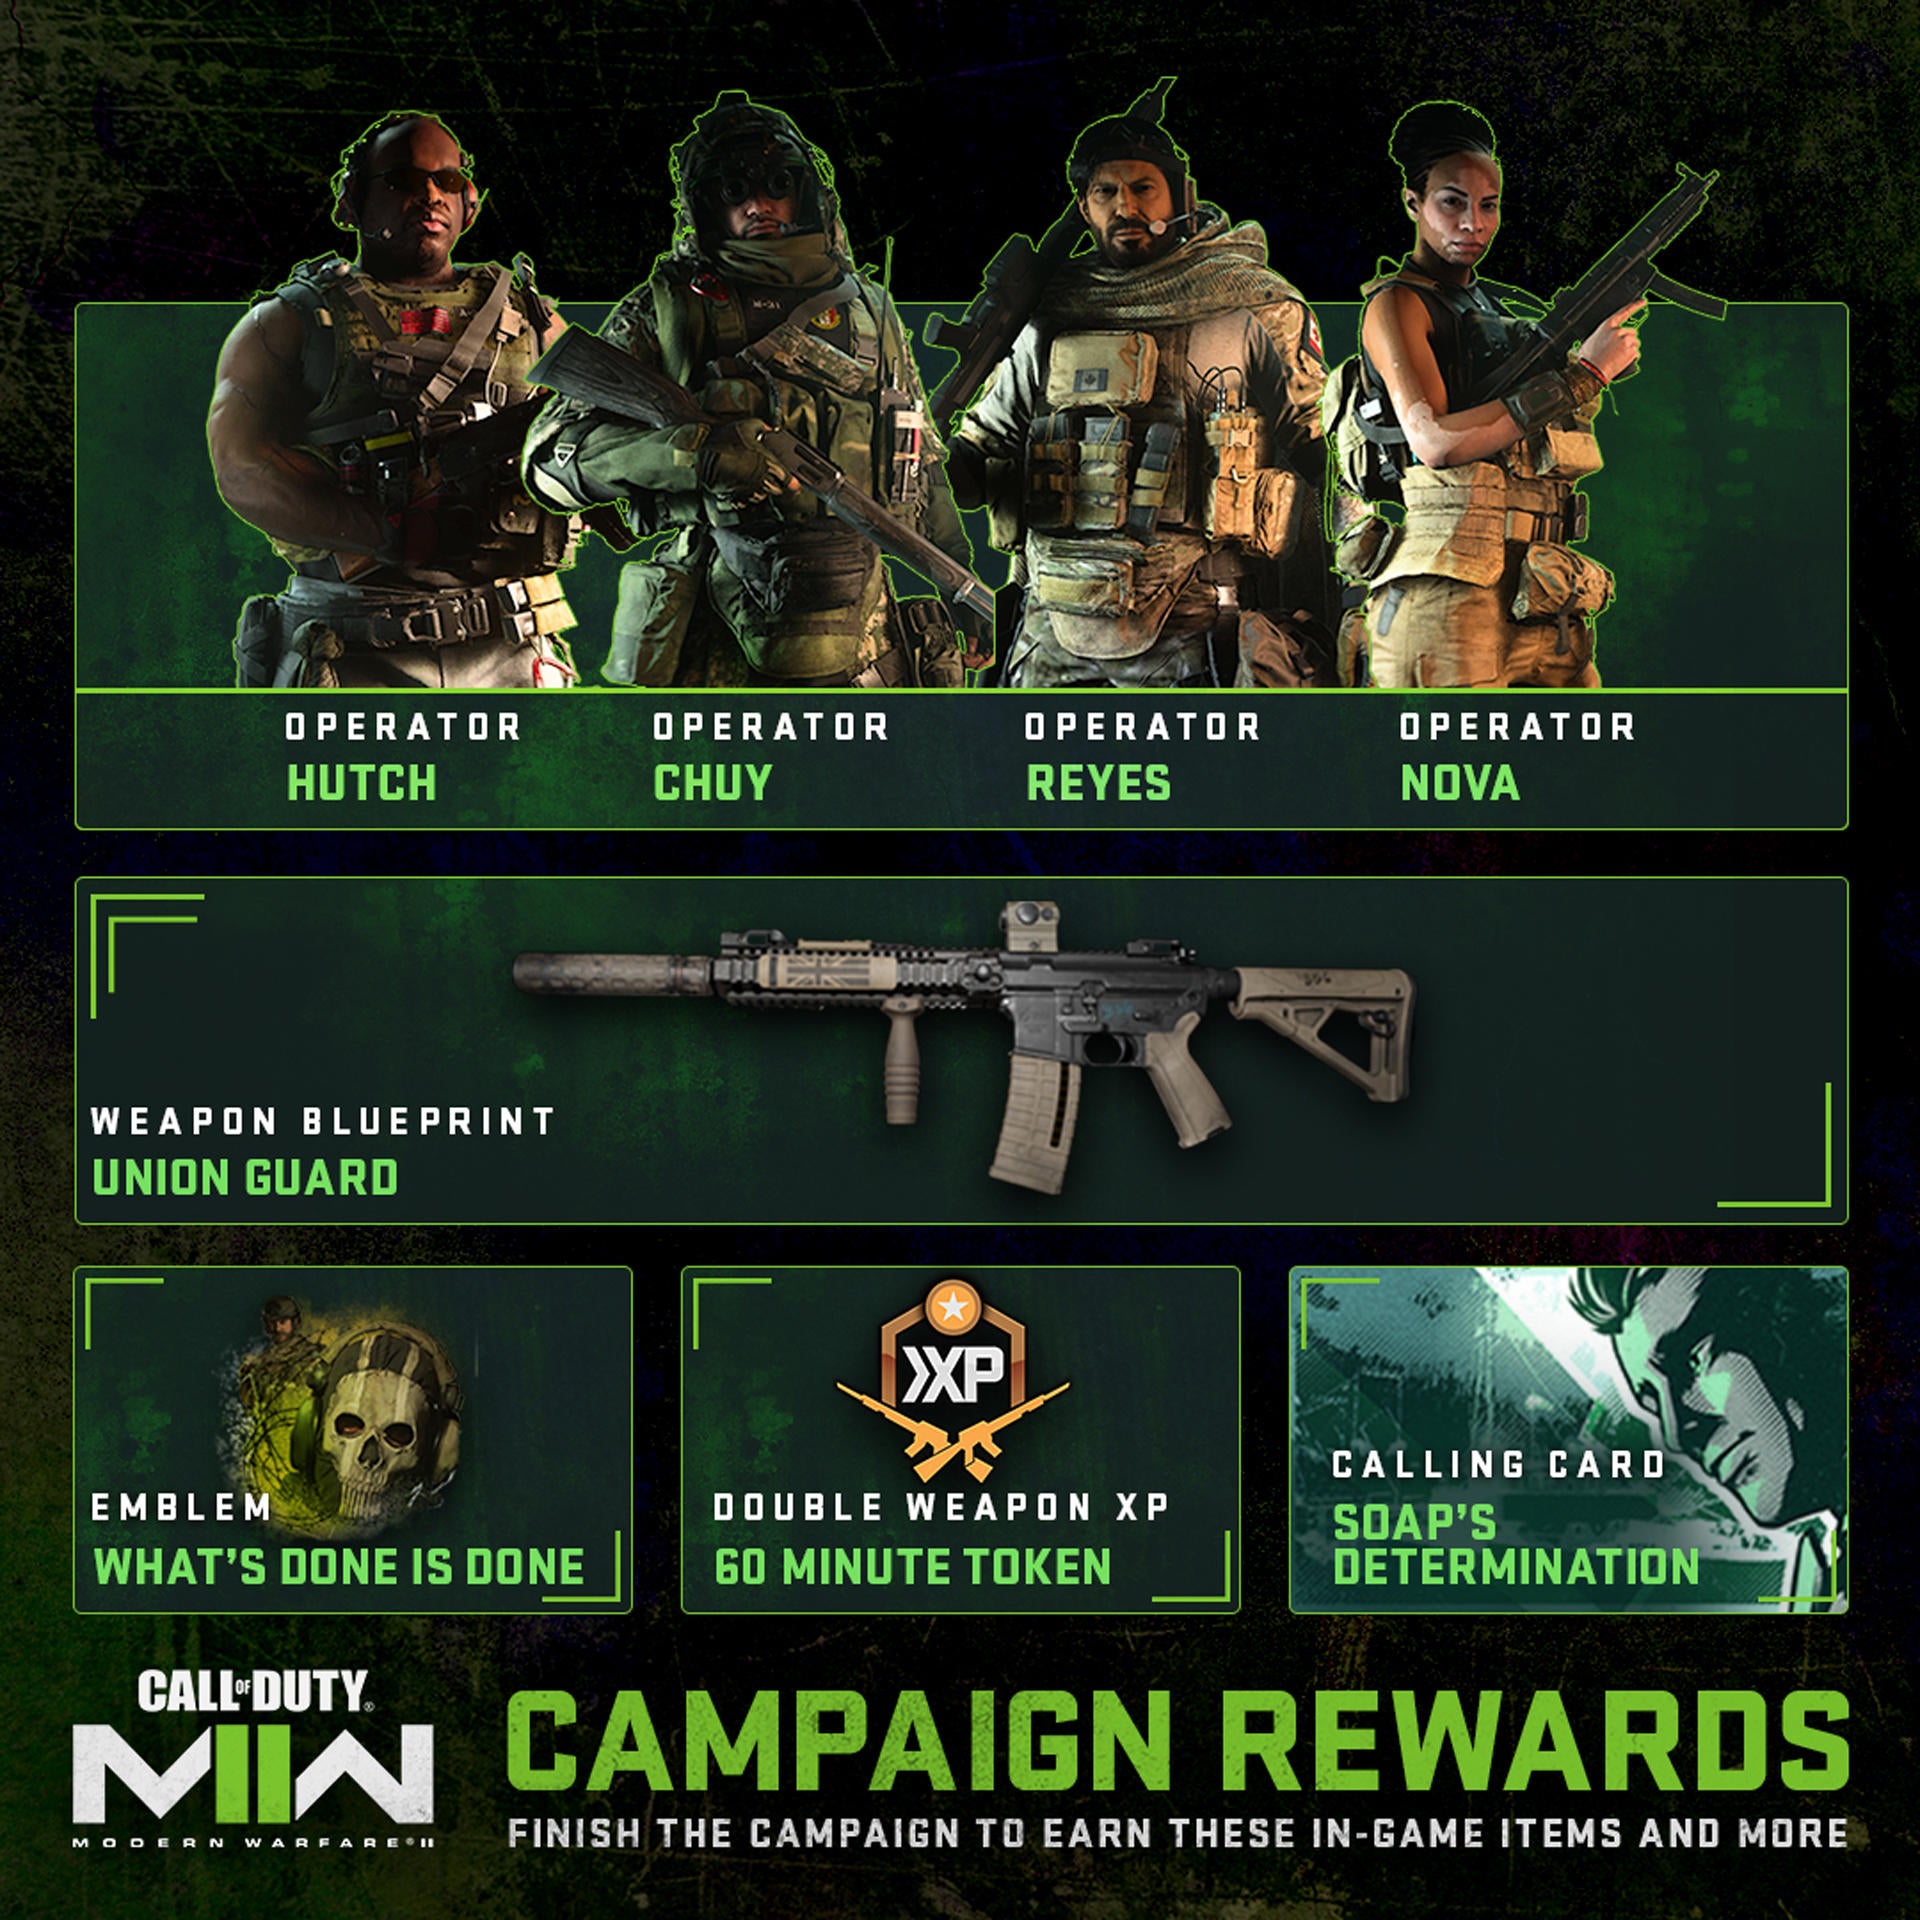 mwii-campaign-rewards-002.jpg